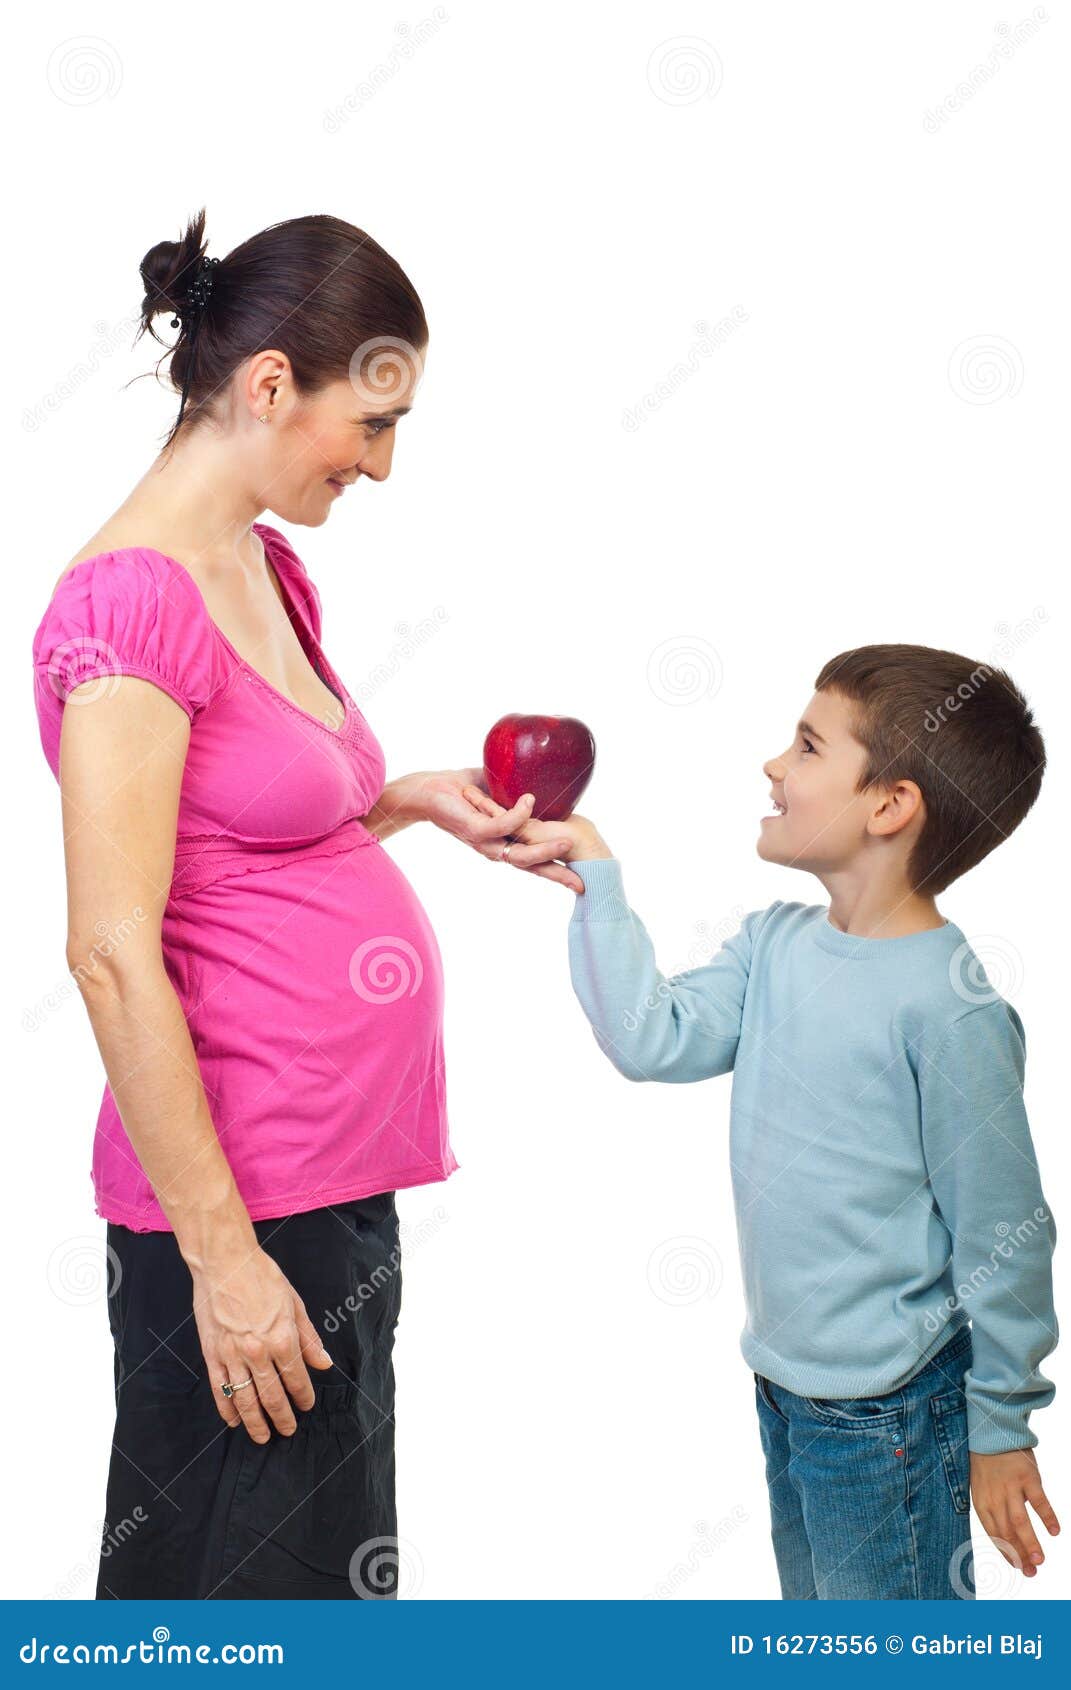 Мама дай яблоко